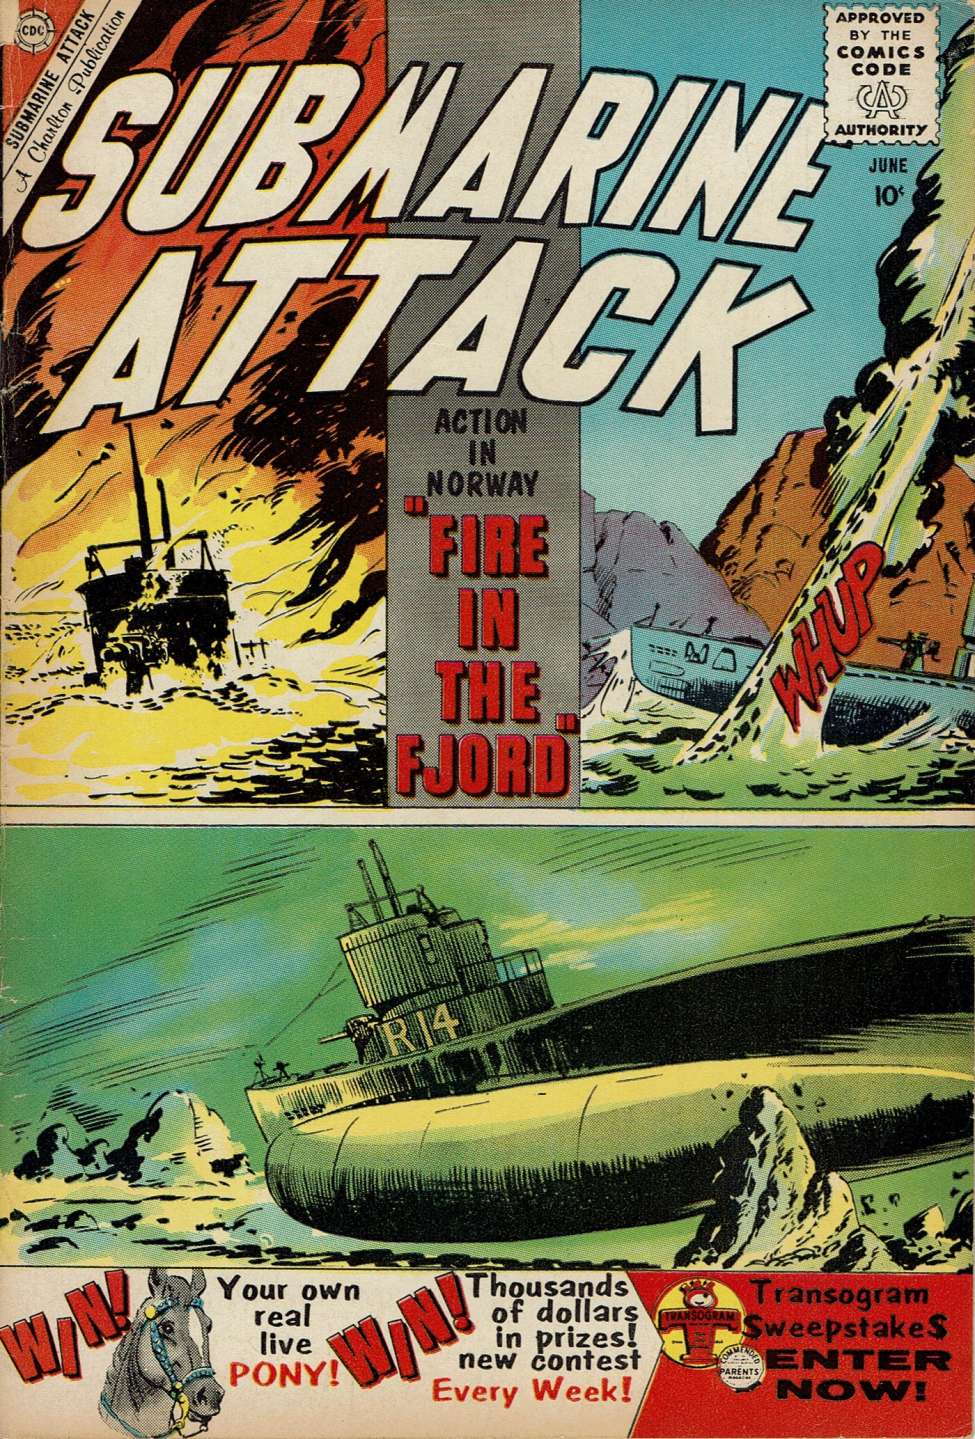 Book Cover For Submarine Attack 22